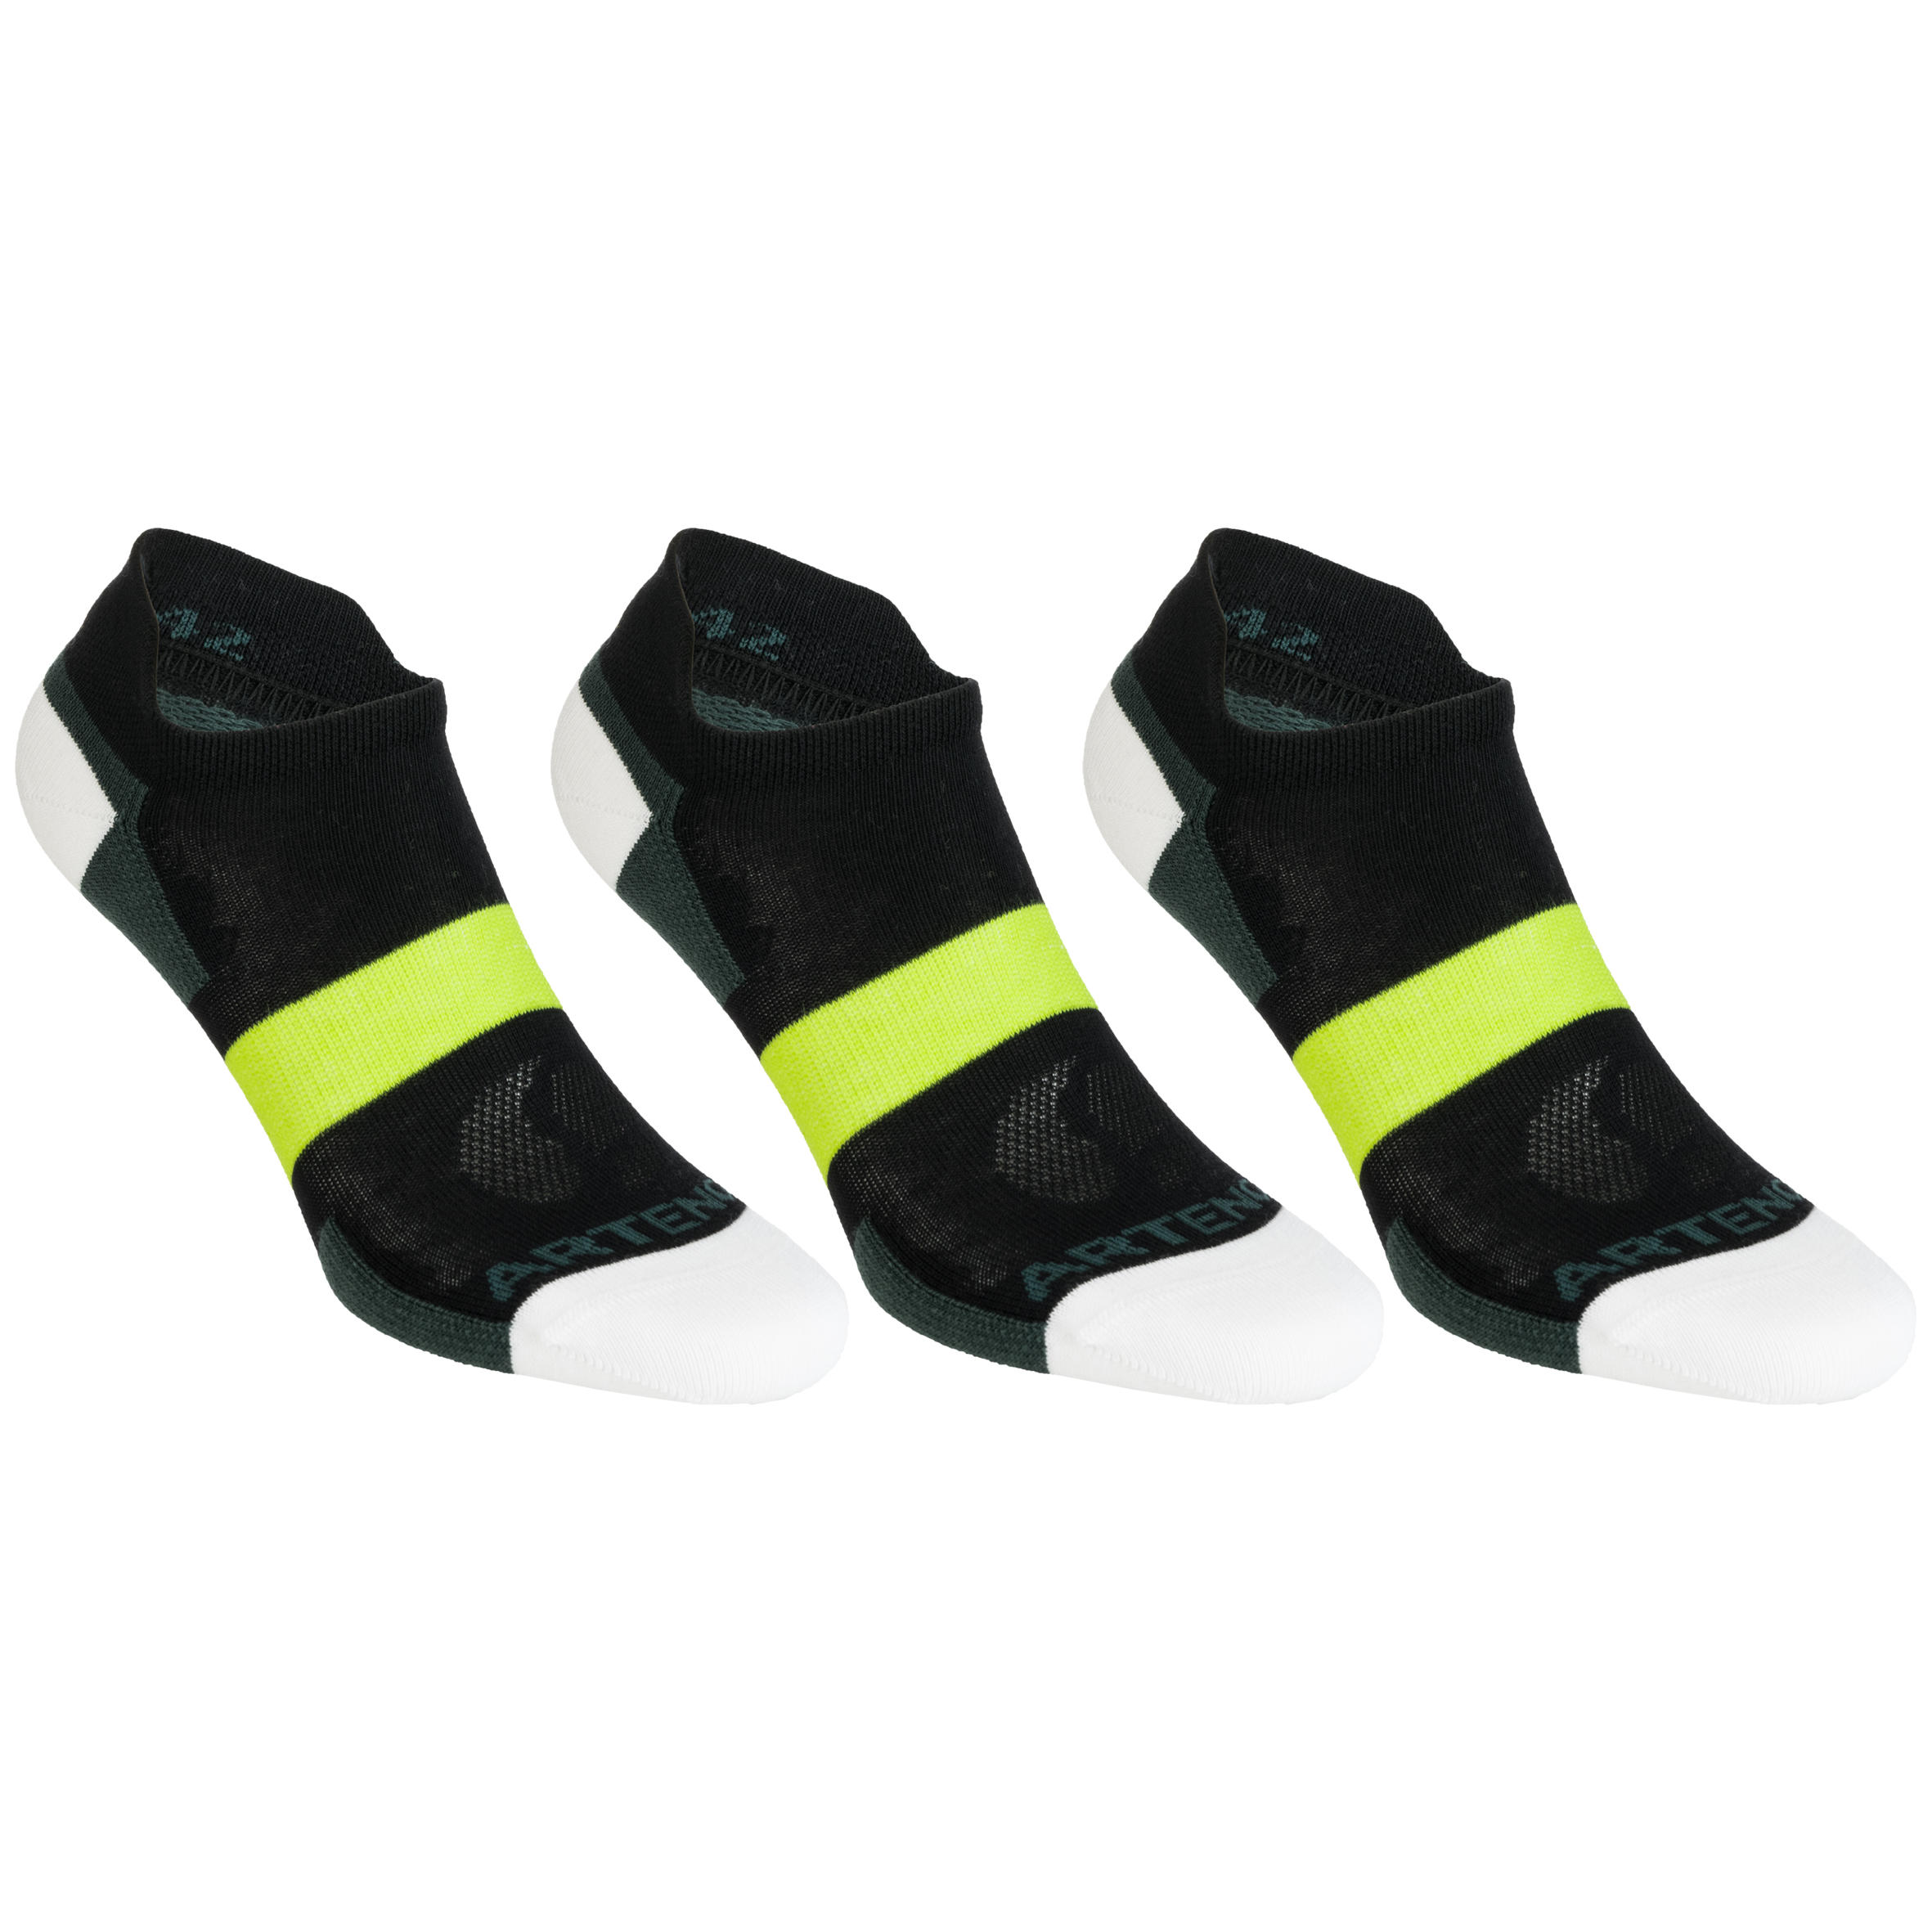 ARTENGO RS 160 Low Sports Socks Tri-Pack - Black/Khaki/Yellow